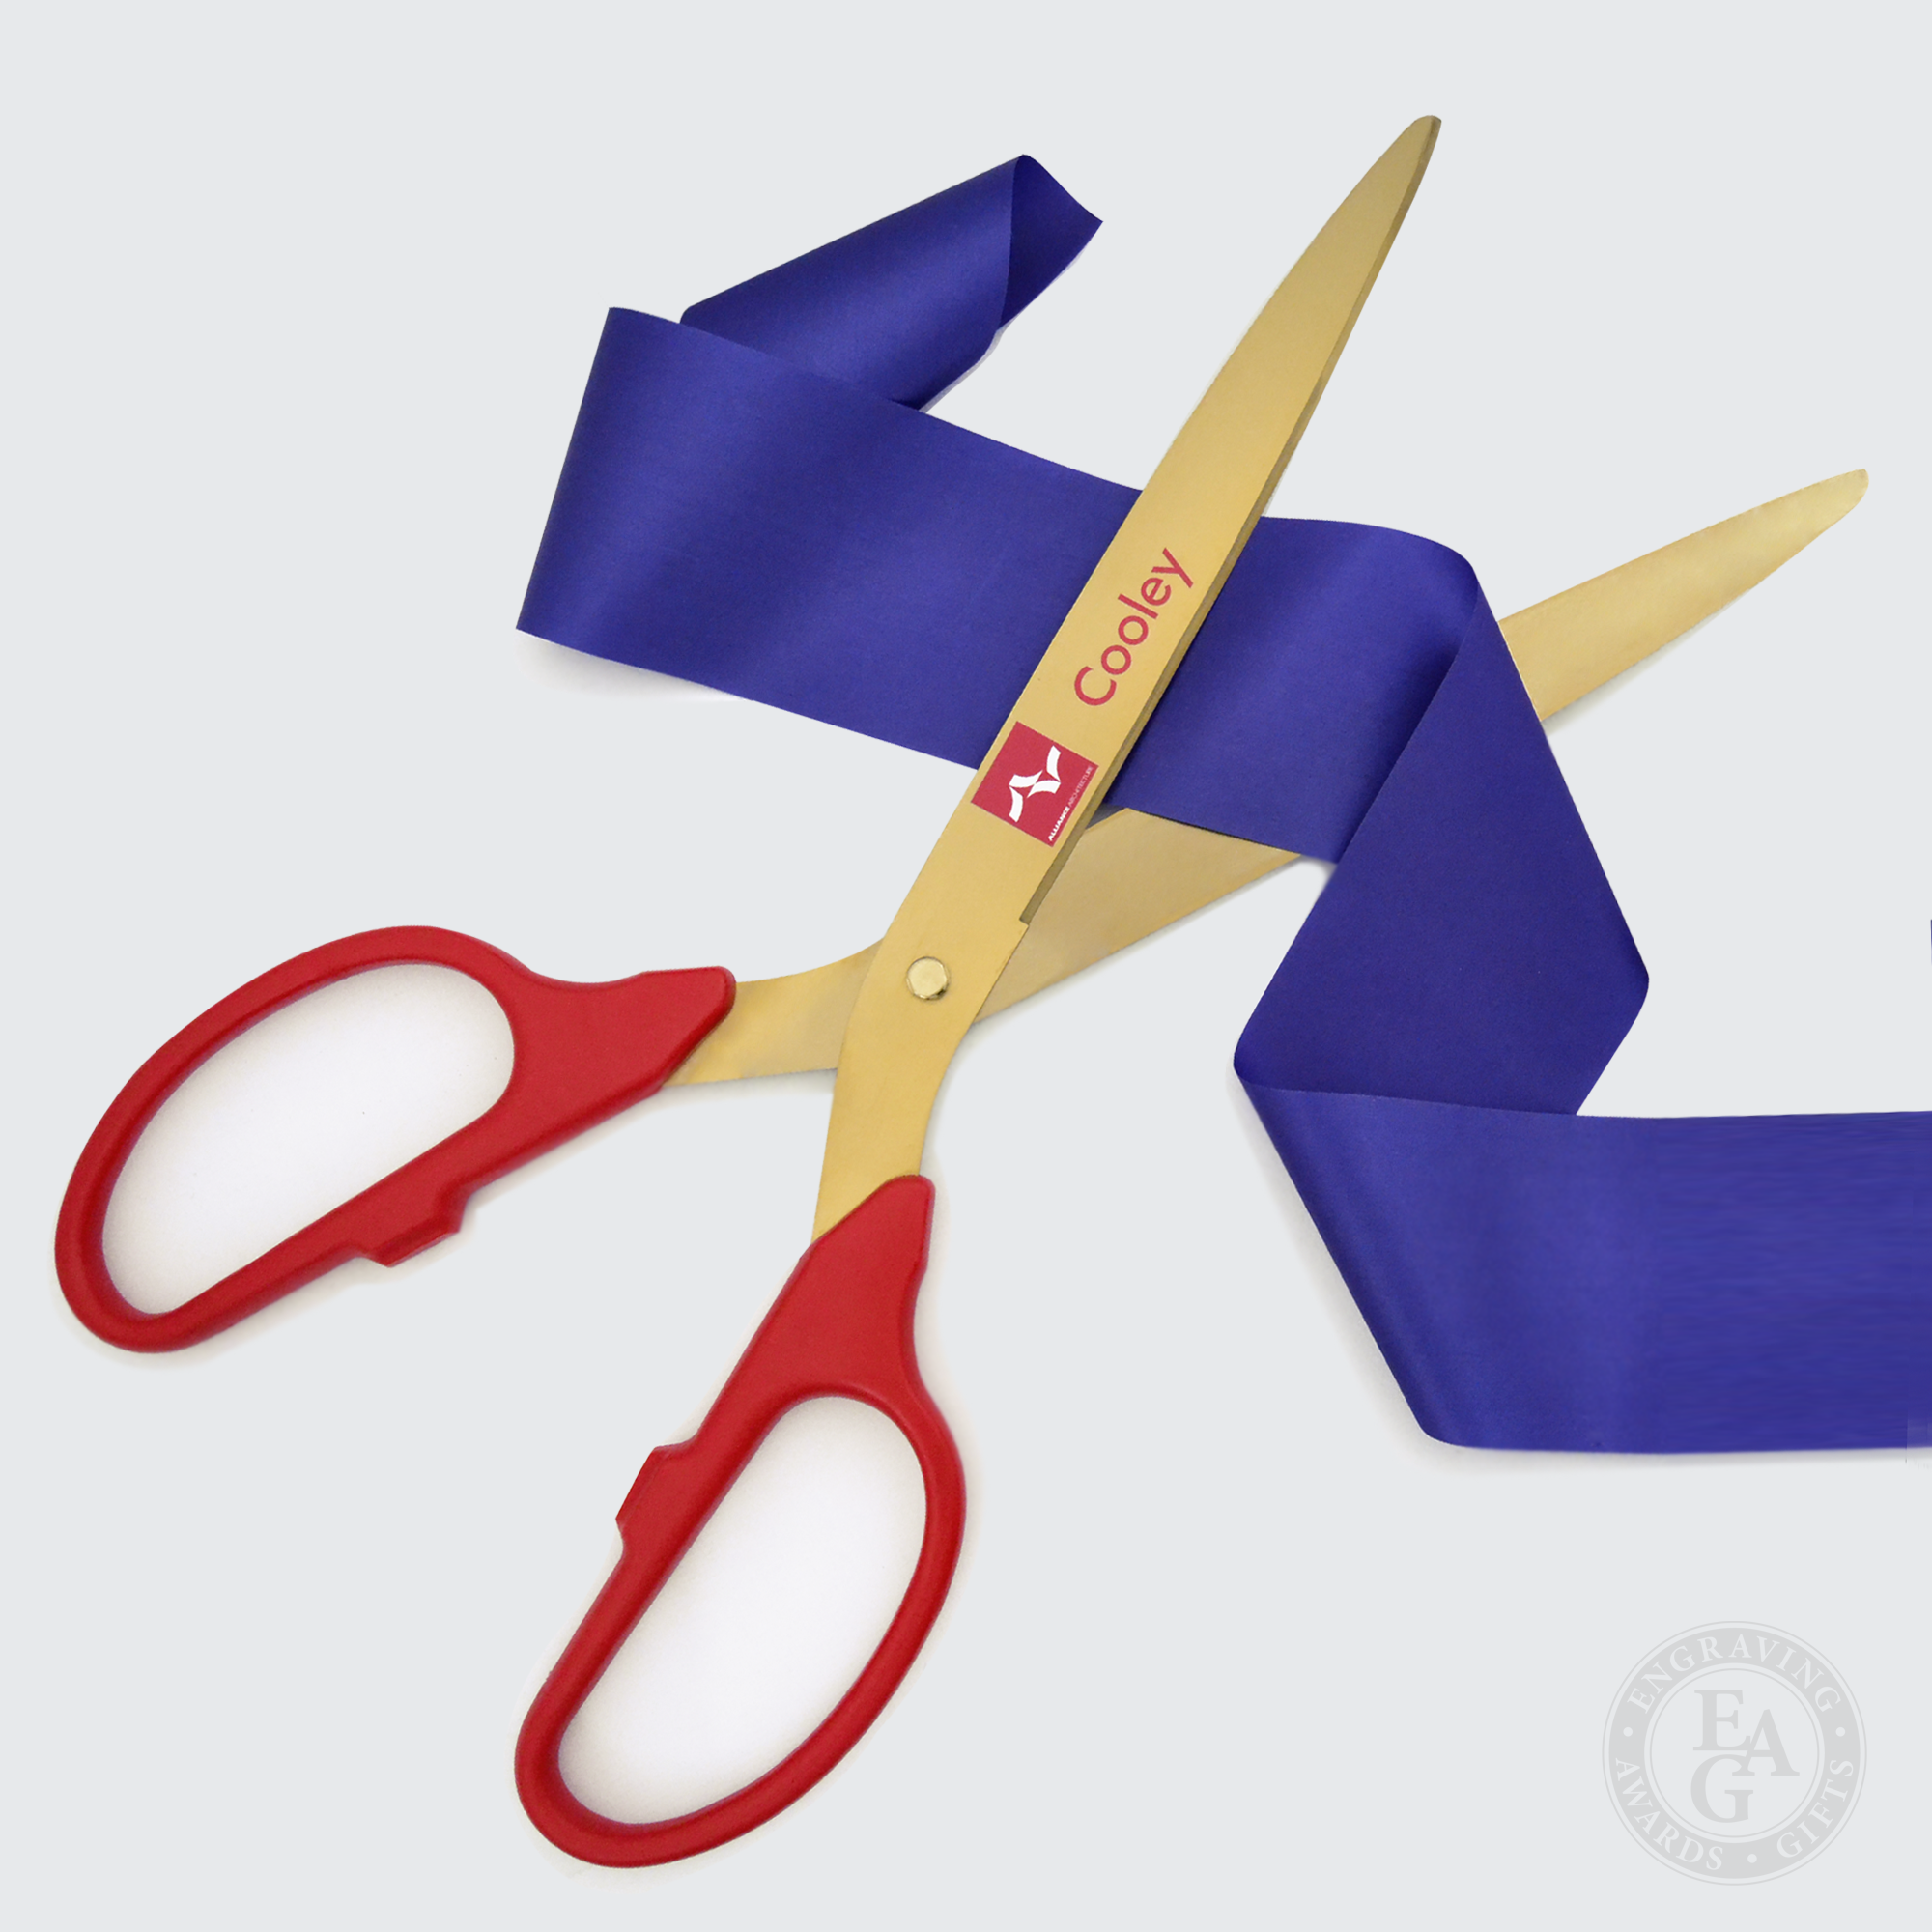 36 Ceremonial Ribbon Cutting Scissors Walnut Plaque